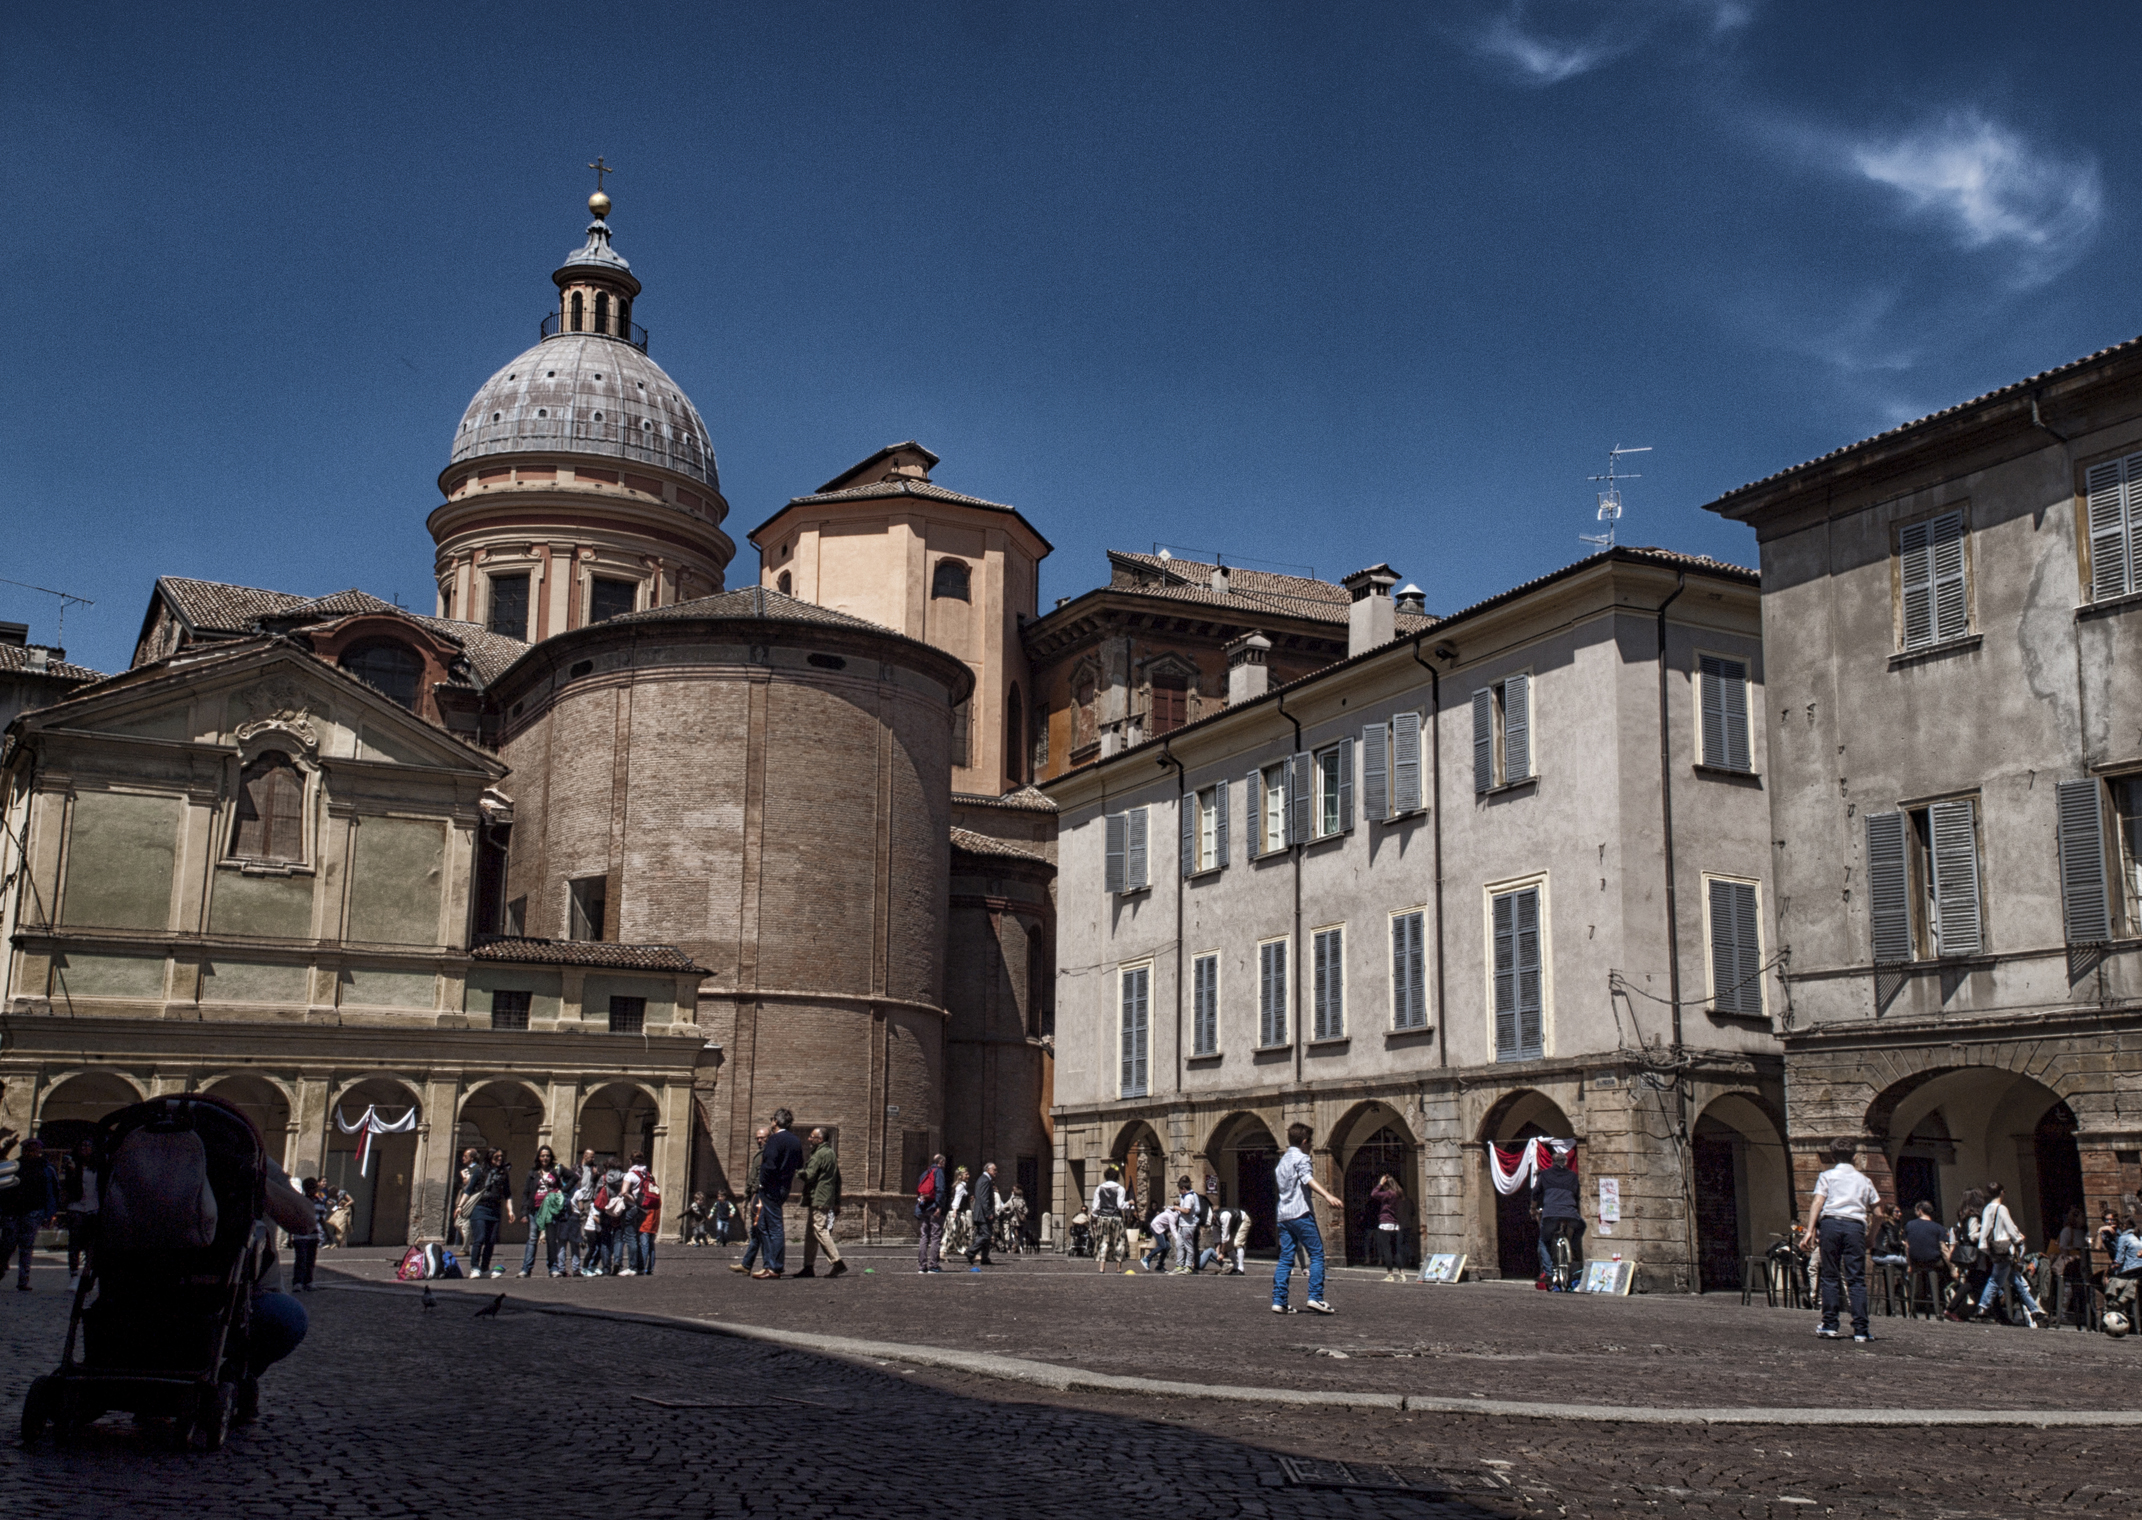 foto: https://upload.wikimedia.org/wikipedia/commons/3/3a/Piazza_dei_leoni.jpg